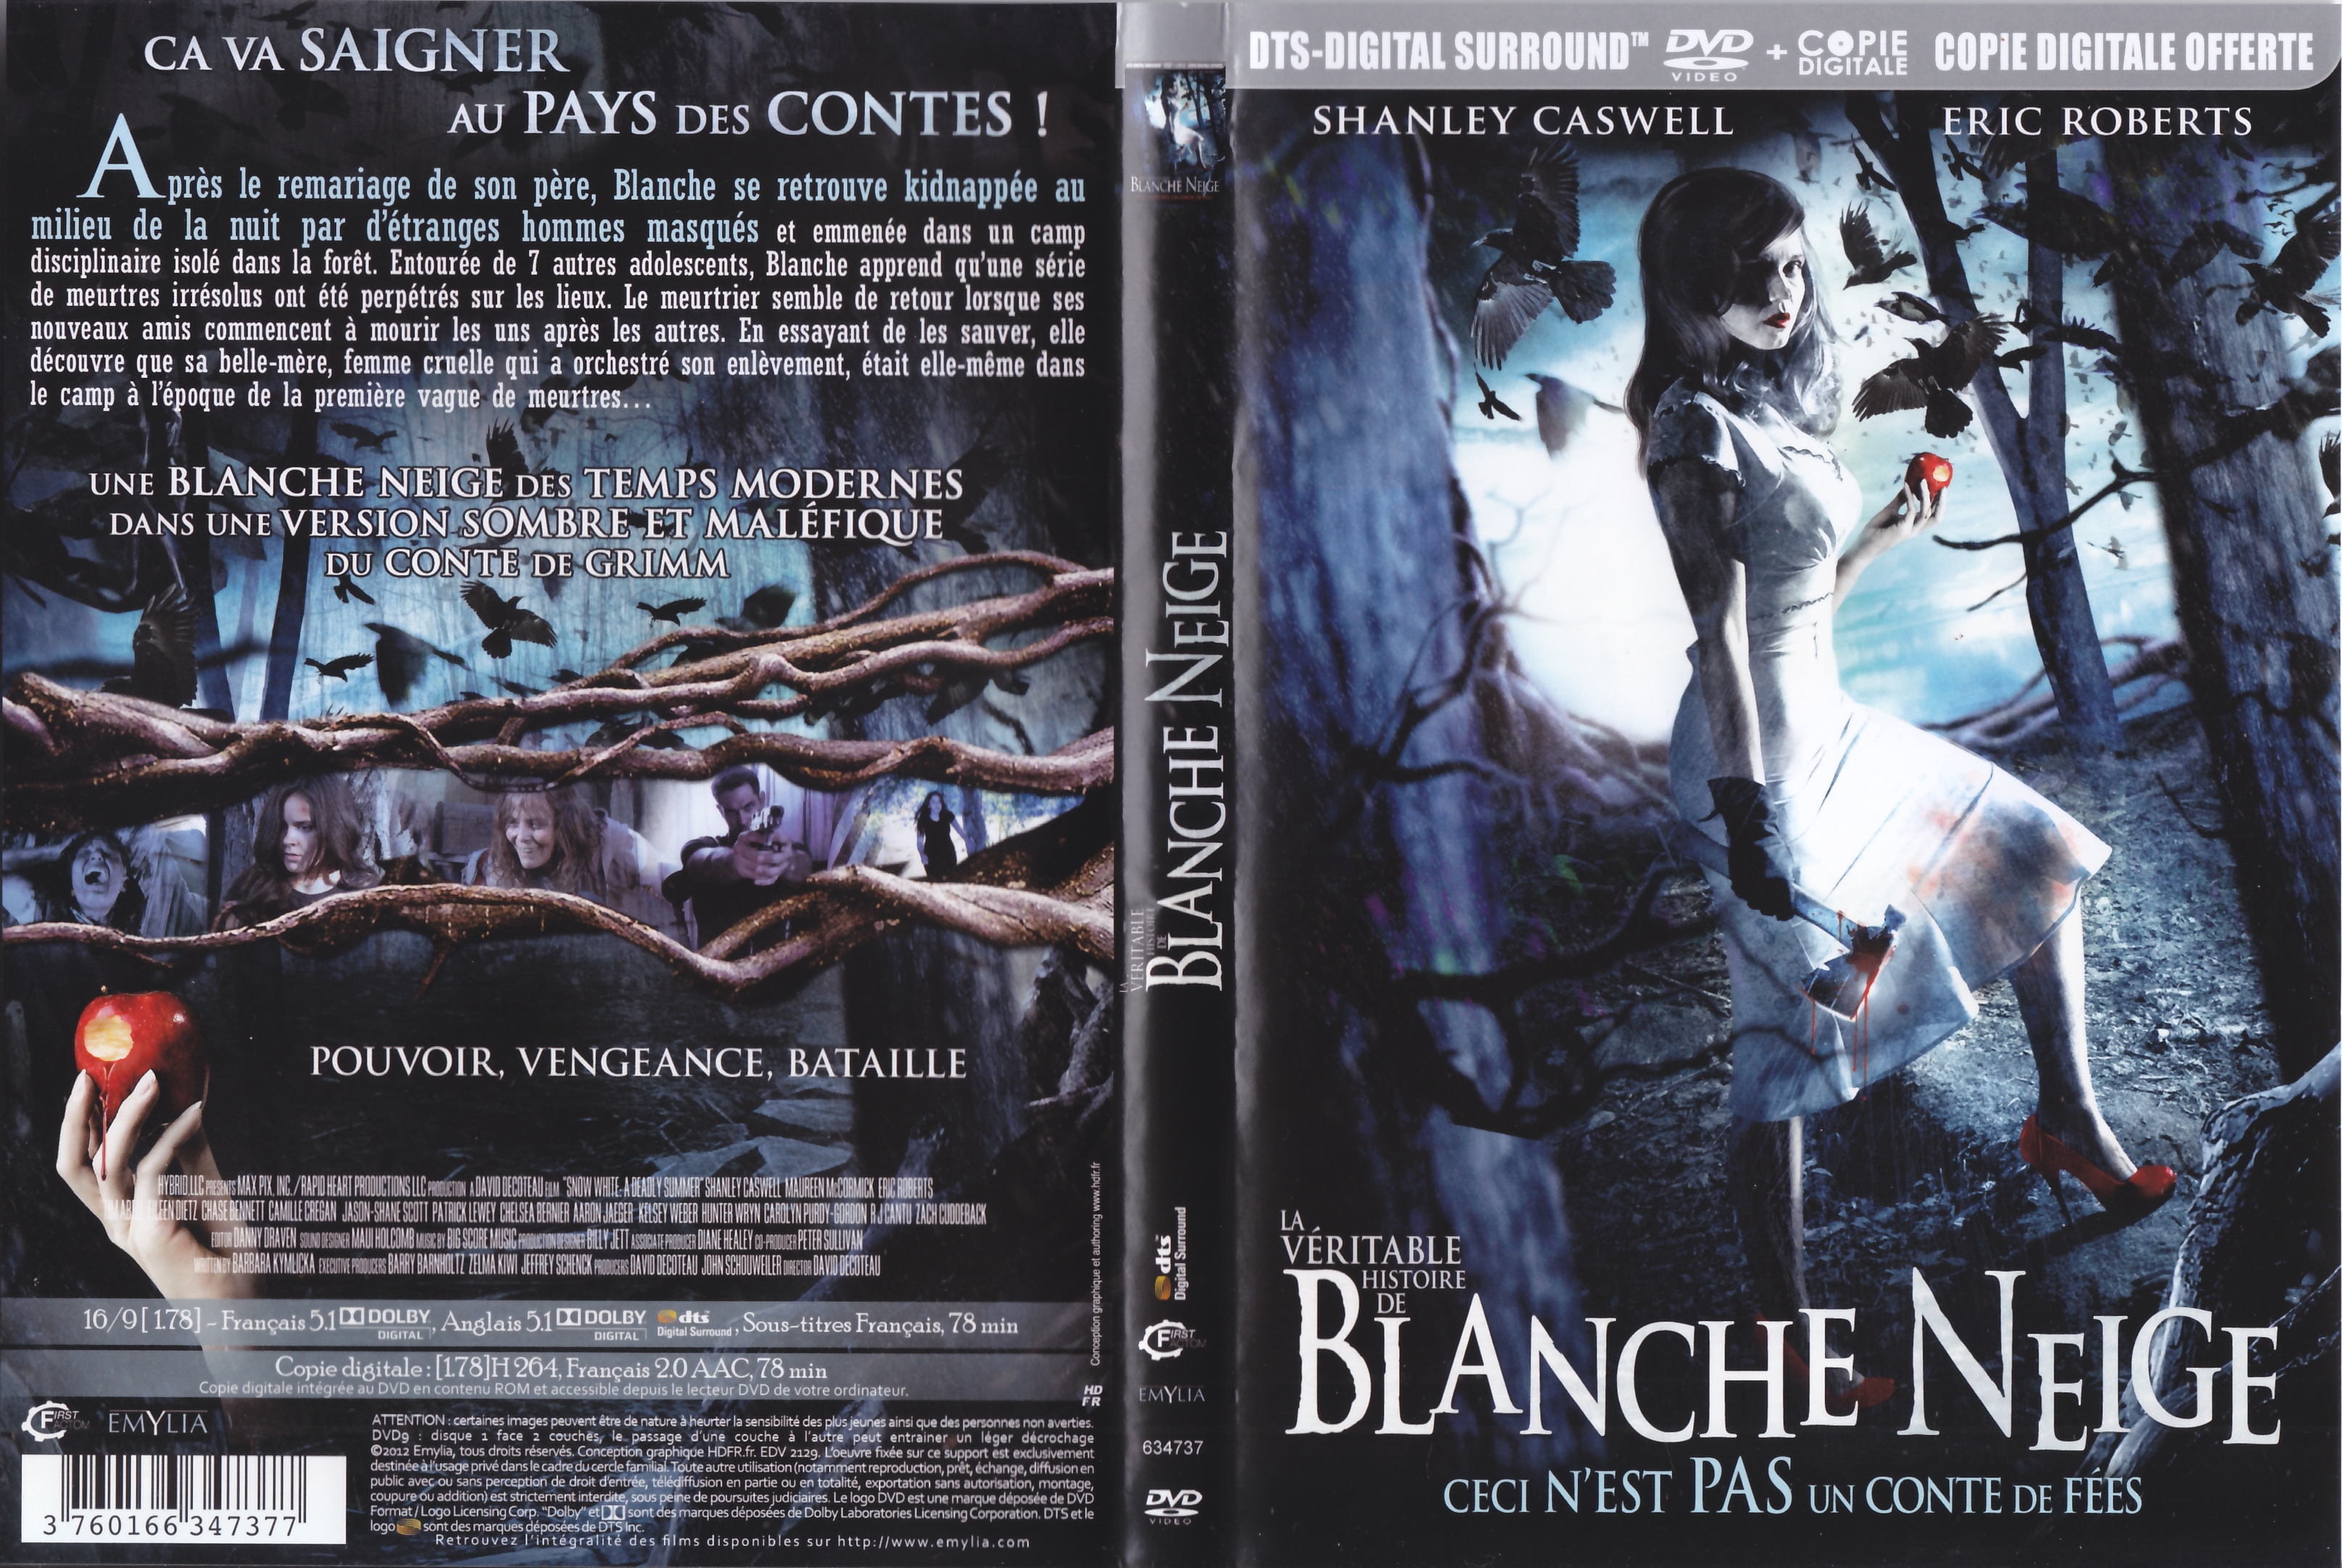 Jaquette DVD La vritabe histoire de Blanche Neige custom